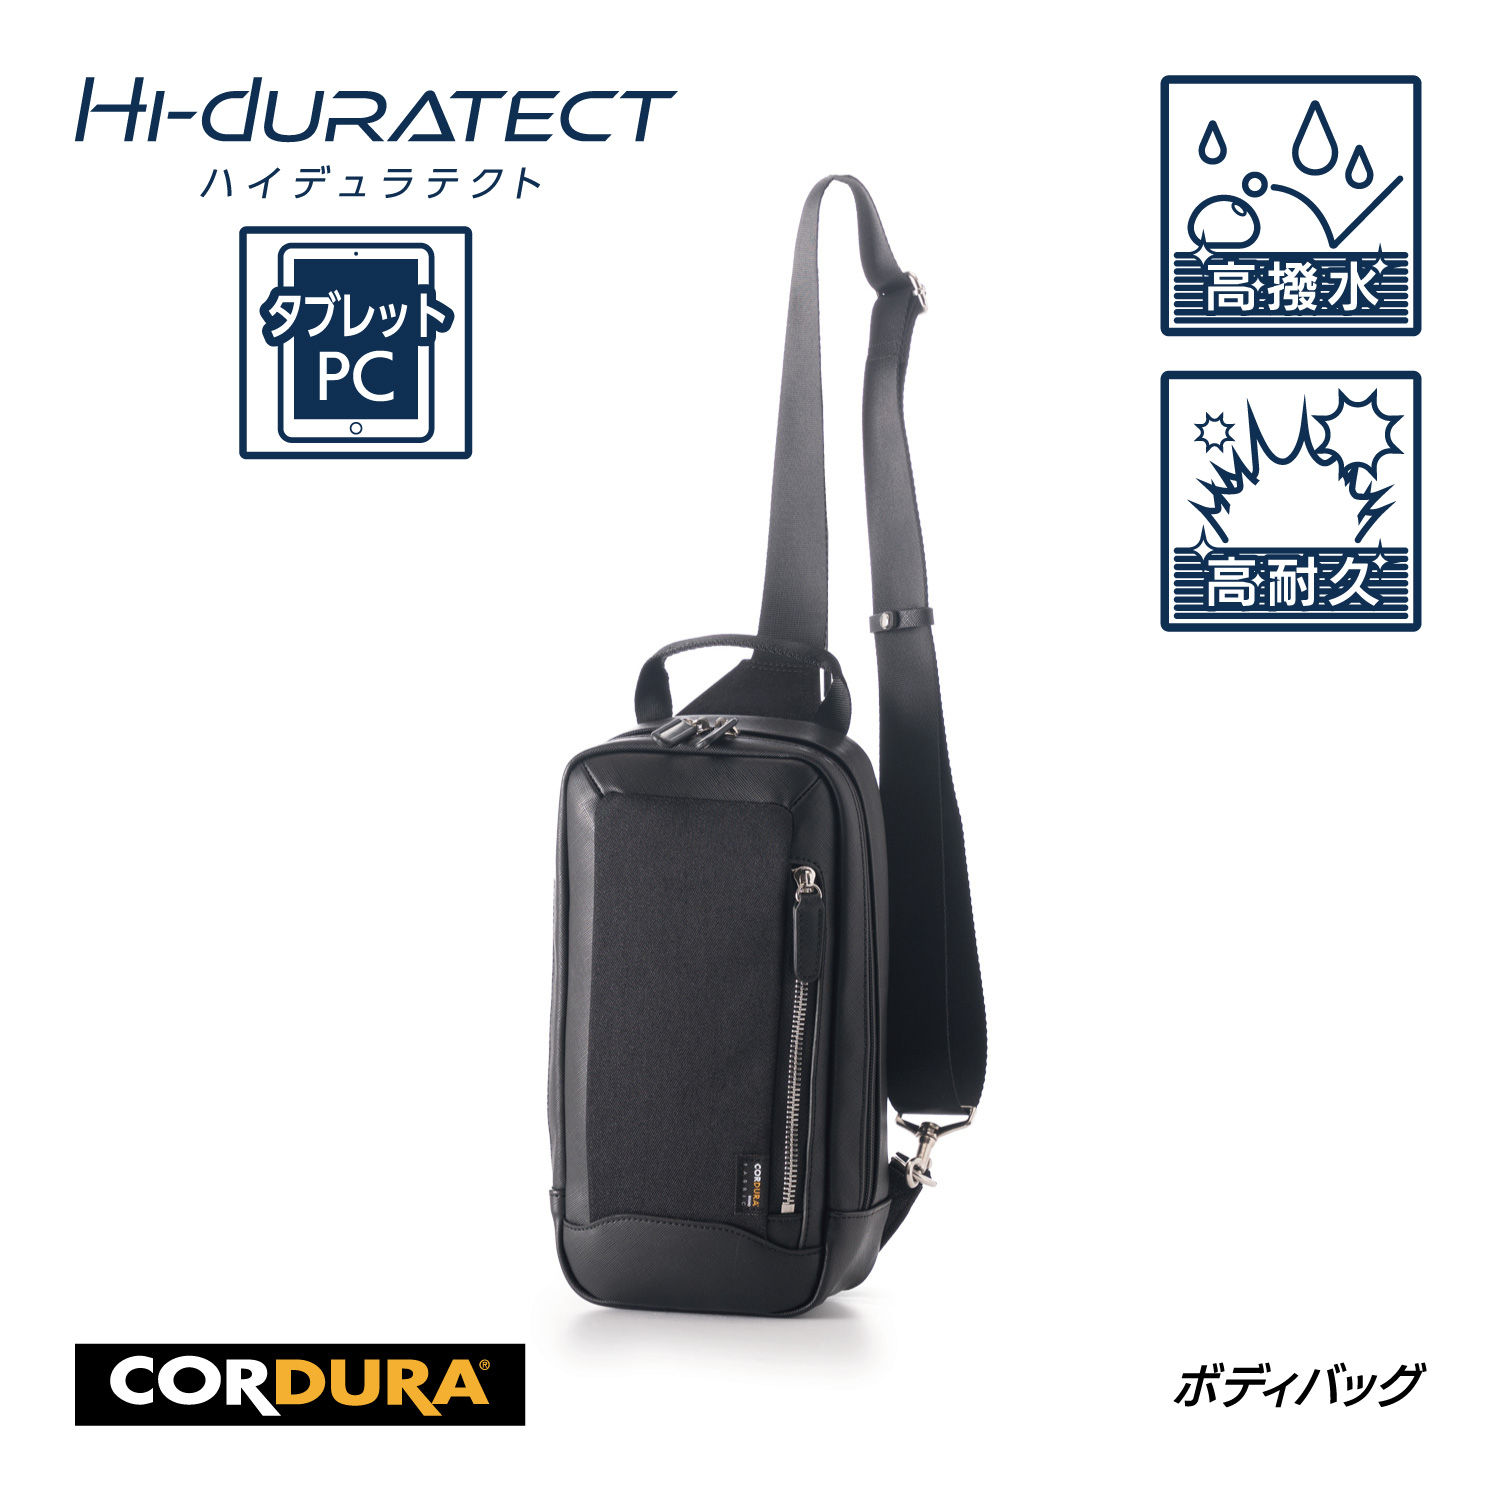 CORDURA | アジア・ラゲージ 公式サイト | Asia Luggage Inc.